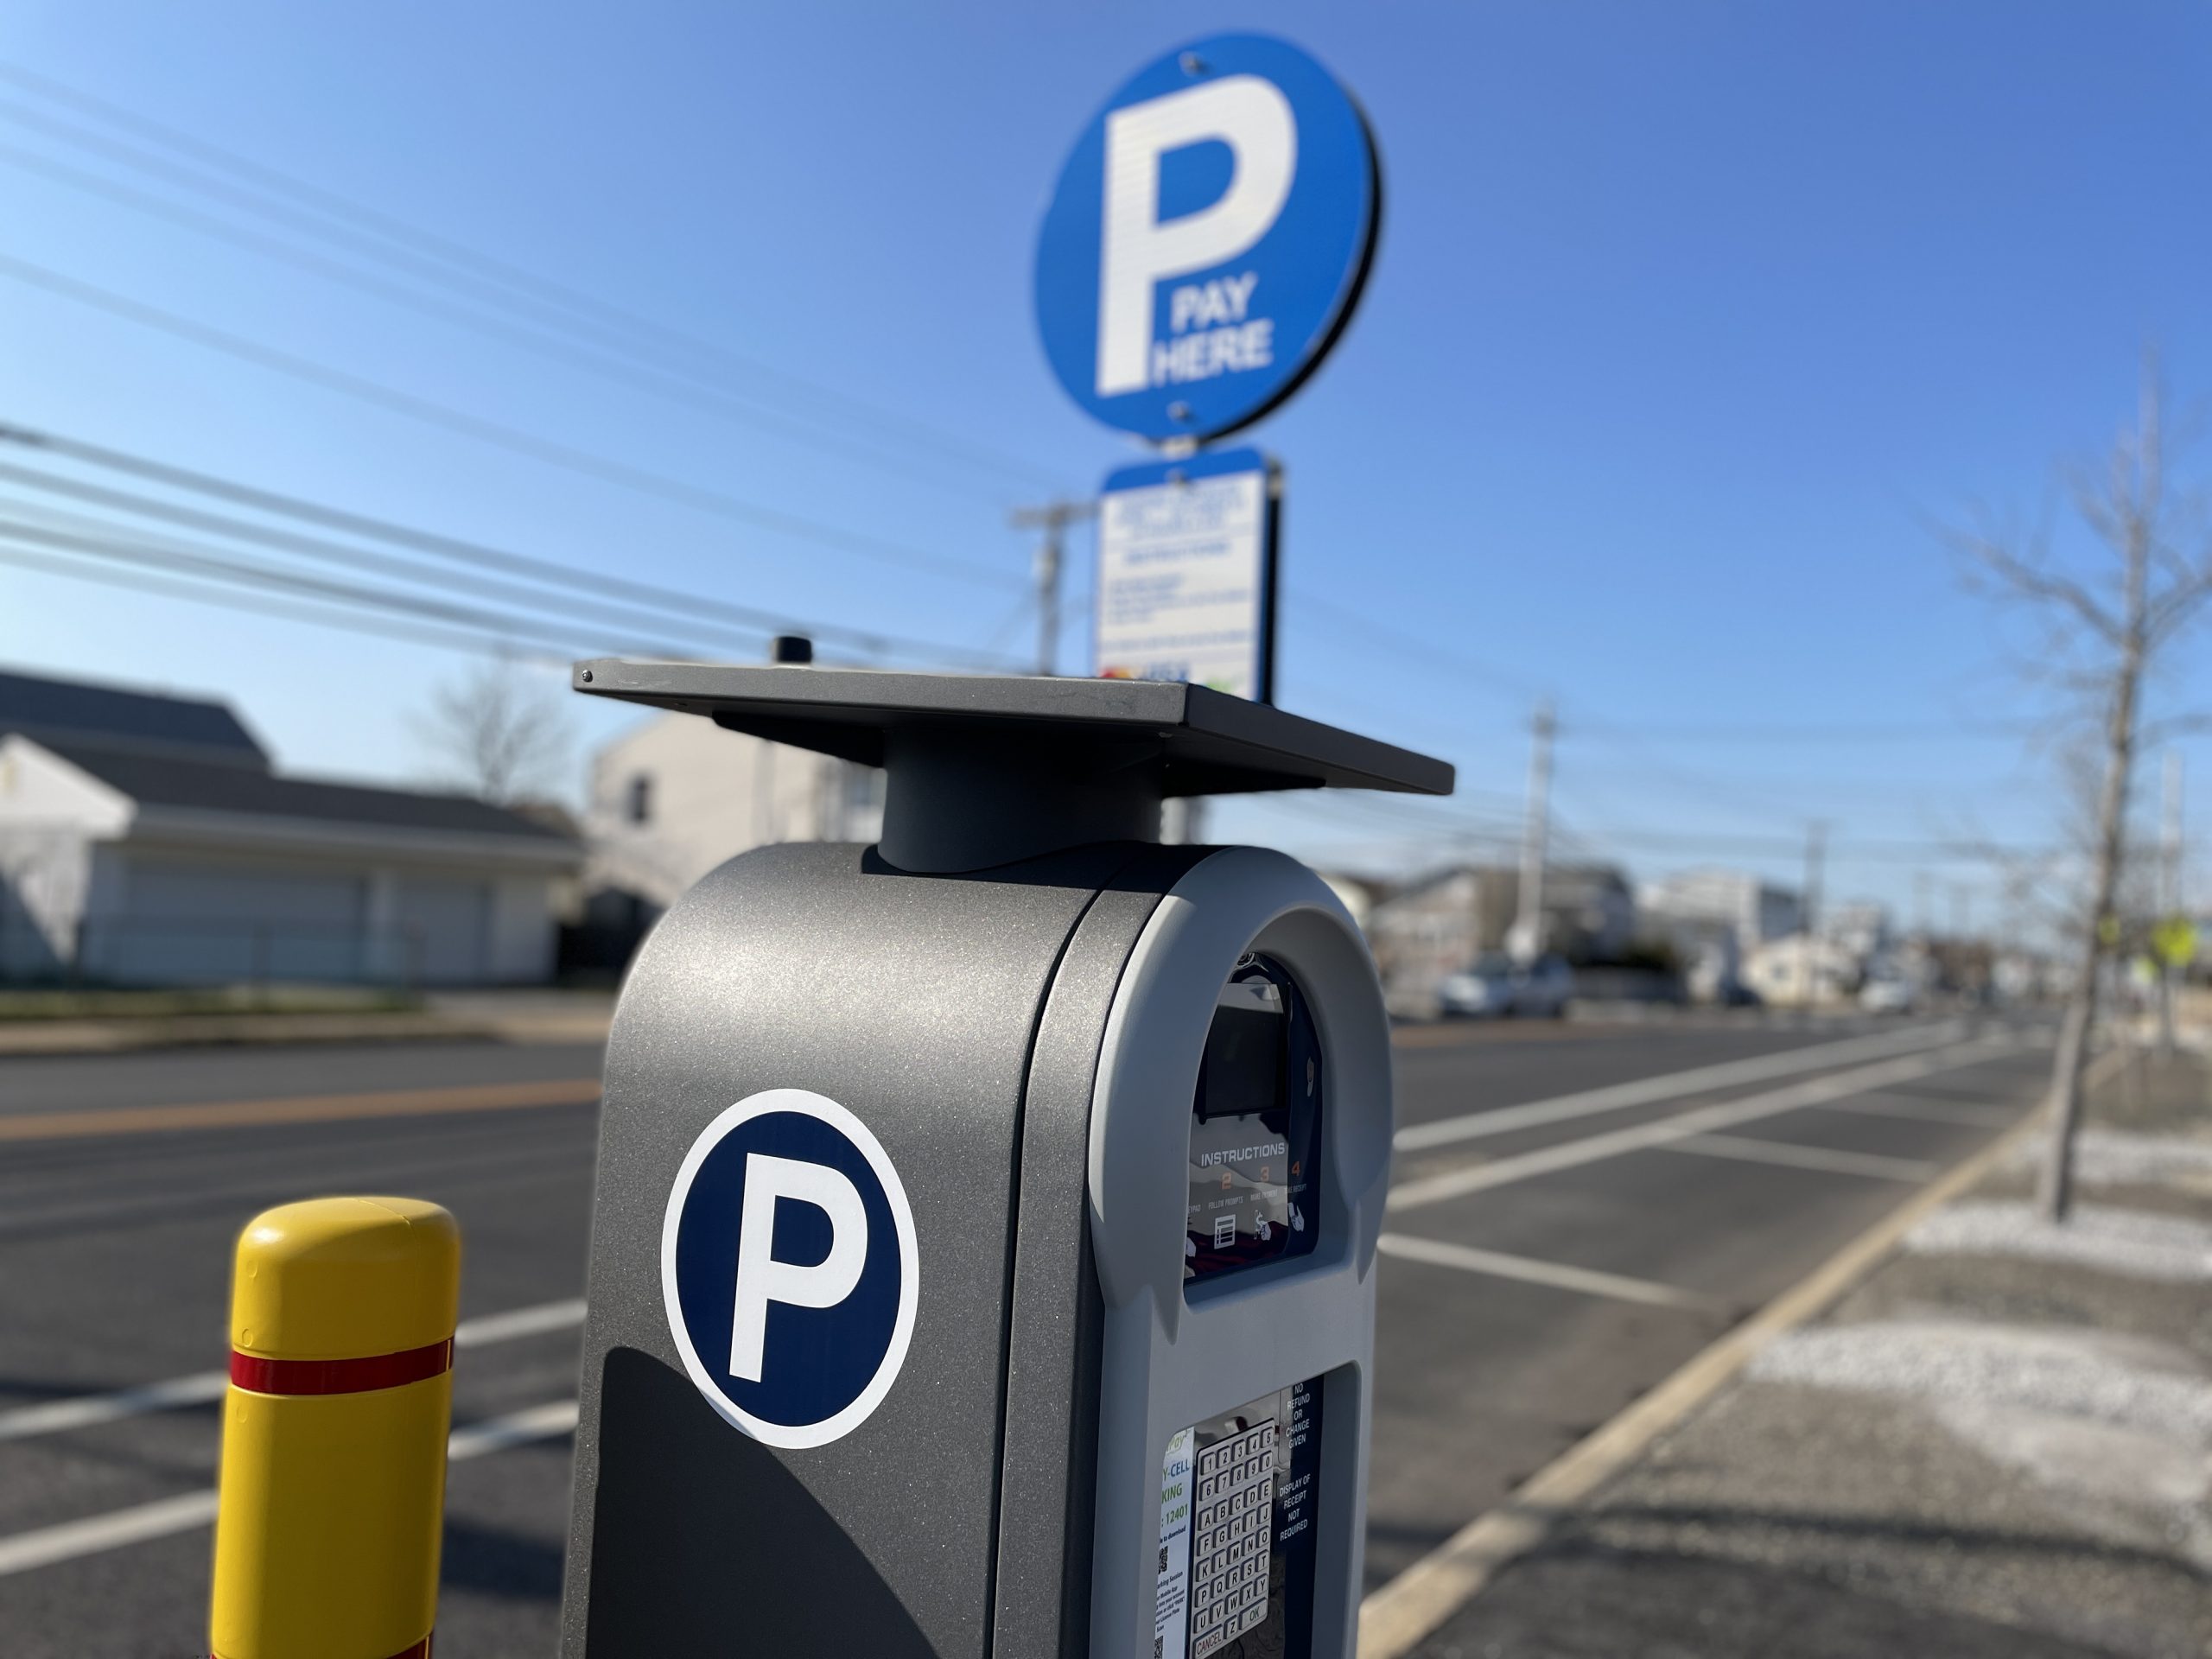 New parking kiosks installed in Seaside Heights, N.J. for the 2021 season. (Photo: Daniel Nee)